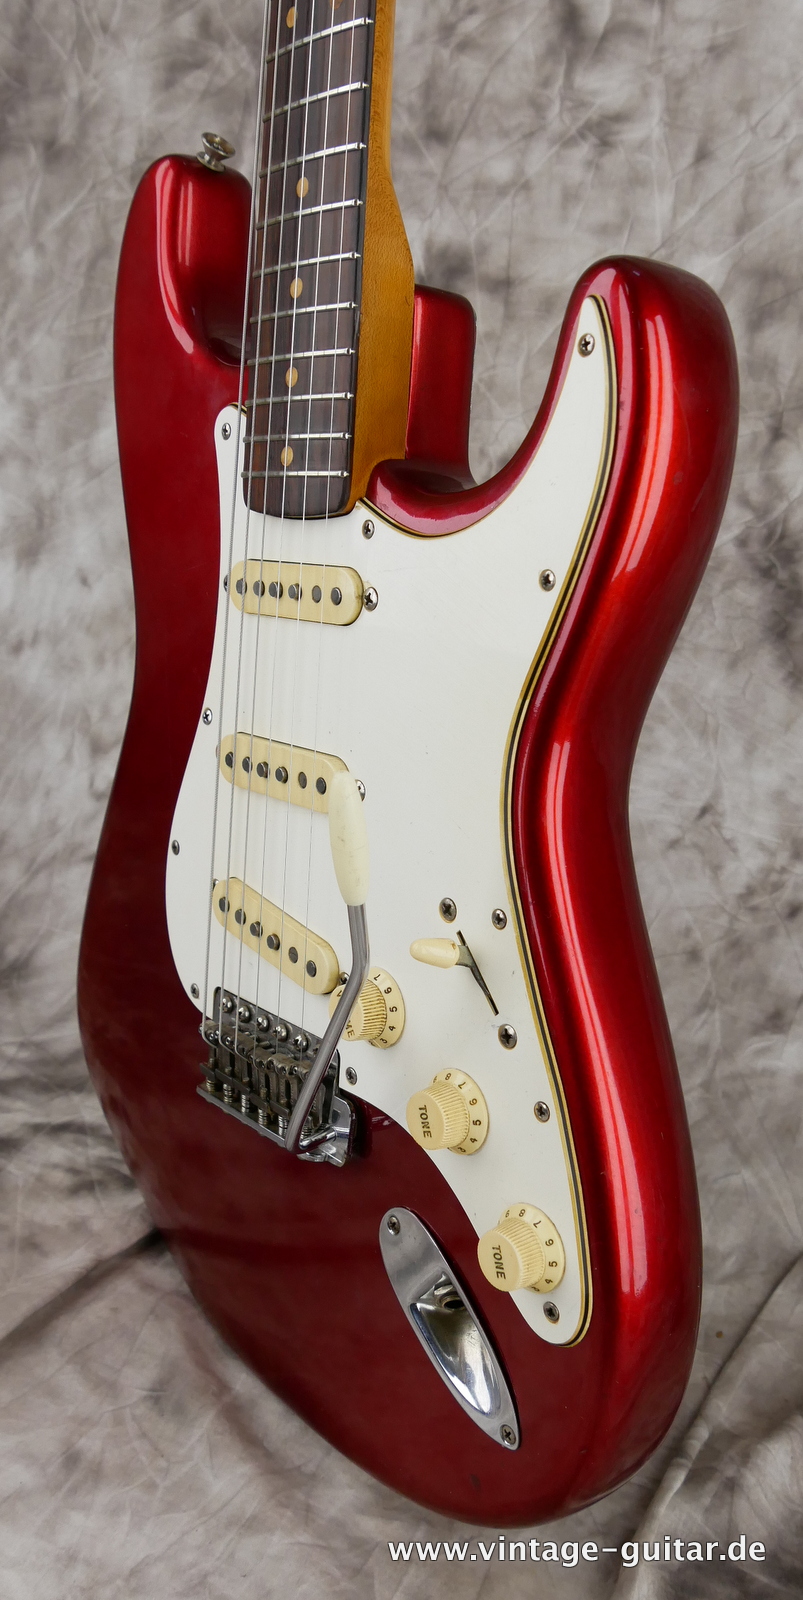 Fender-Stratocaster-1964-candy-apple-red-006.JPG